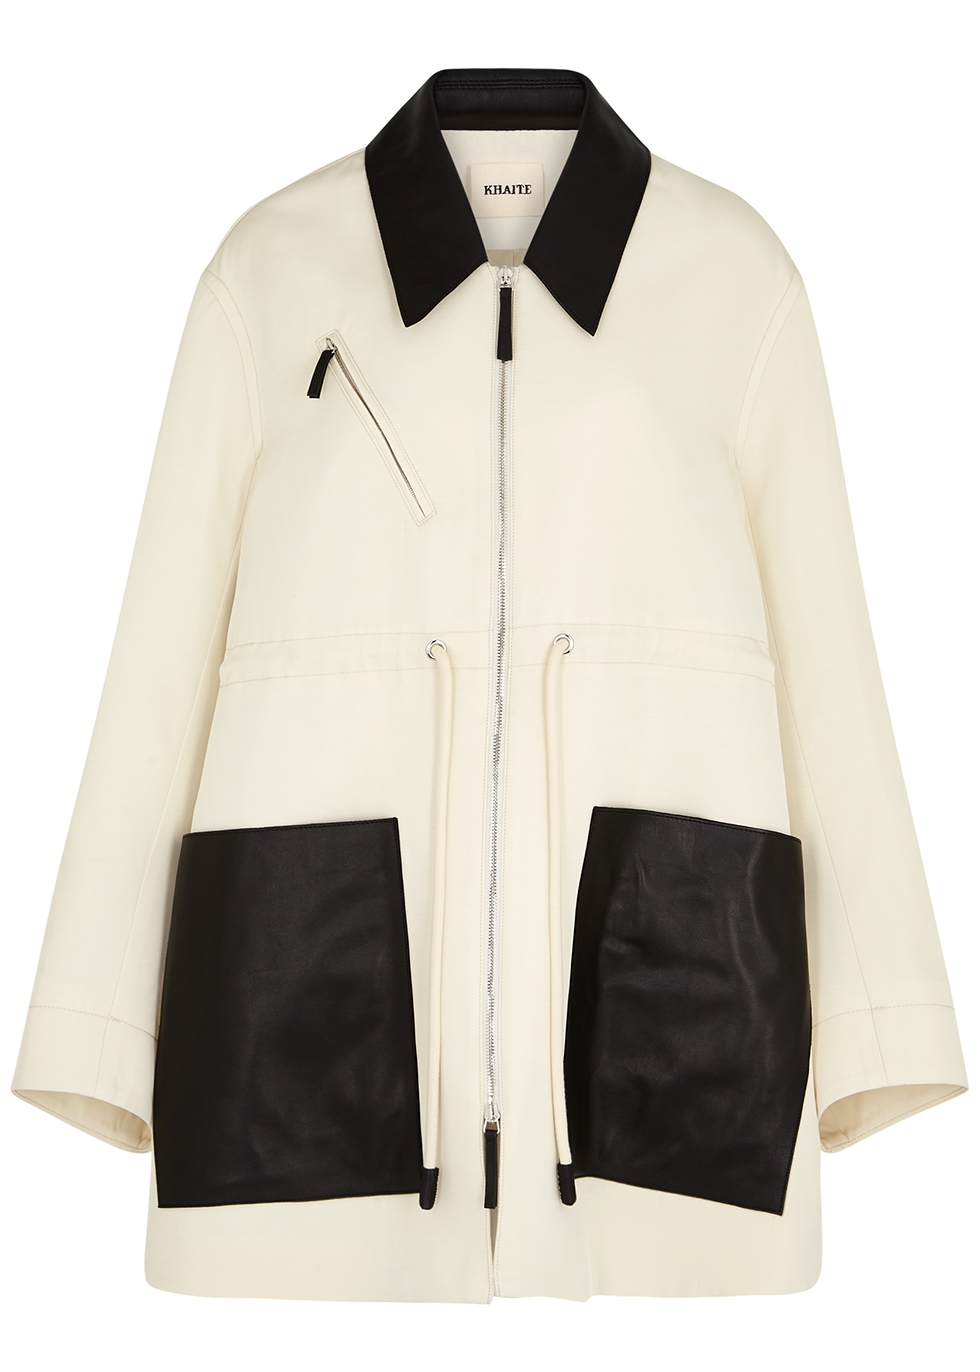 Khaite Hampton cream leather-trimmed faille jacket